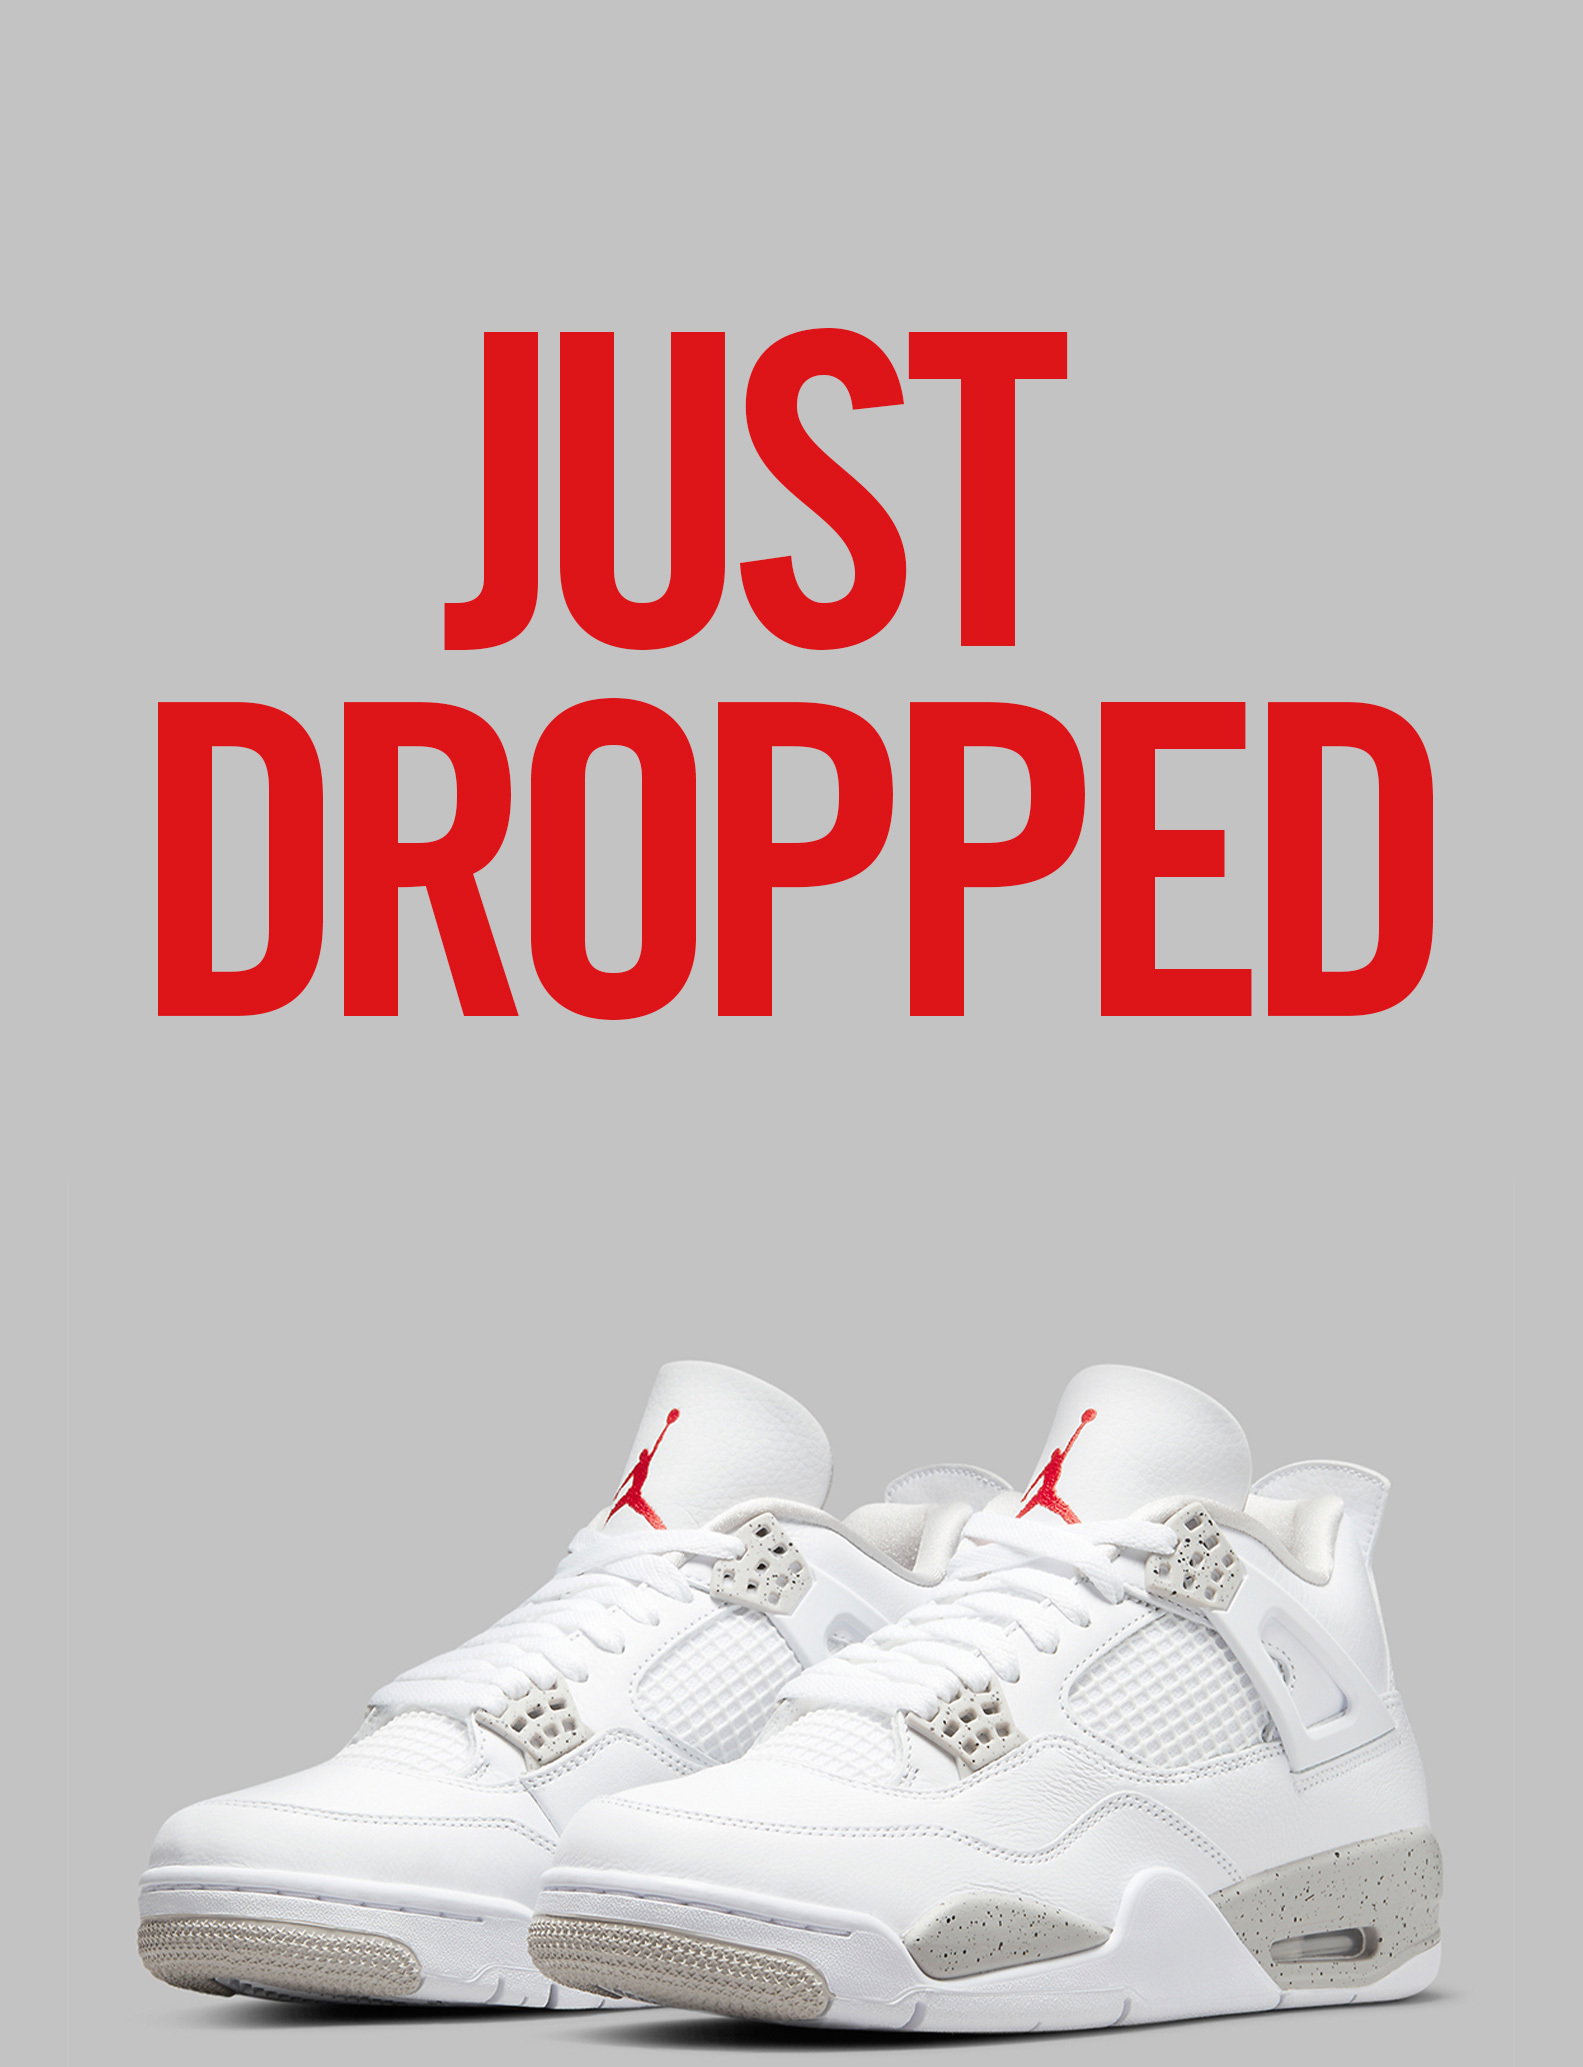 Tech White' Air Jordan 4s Are Dropping Next Week